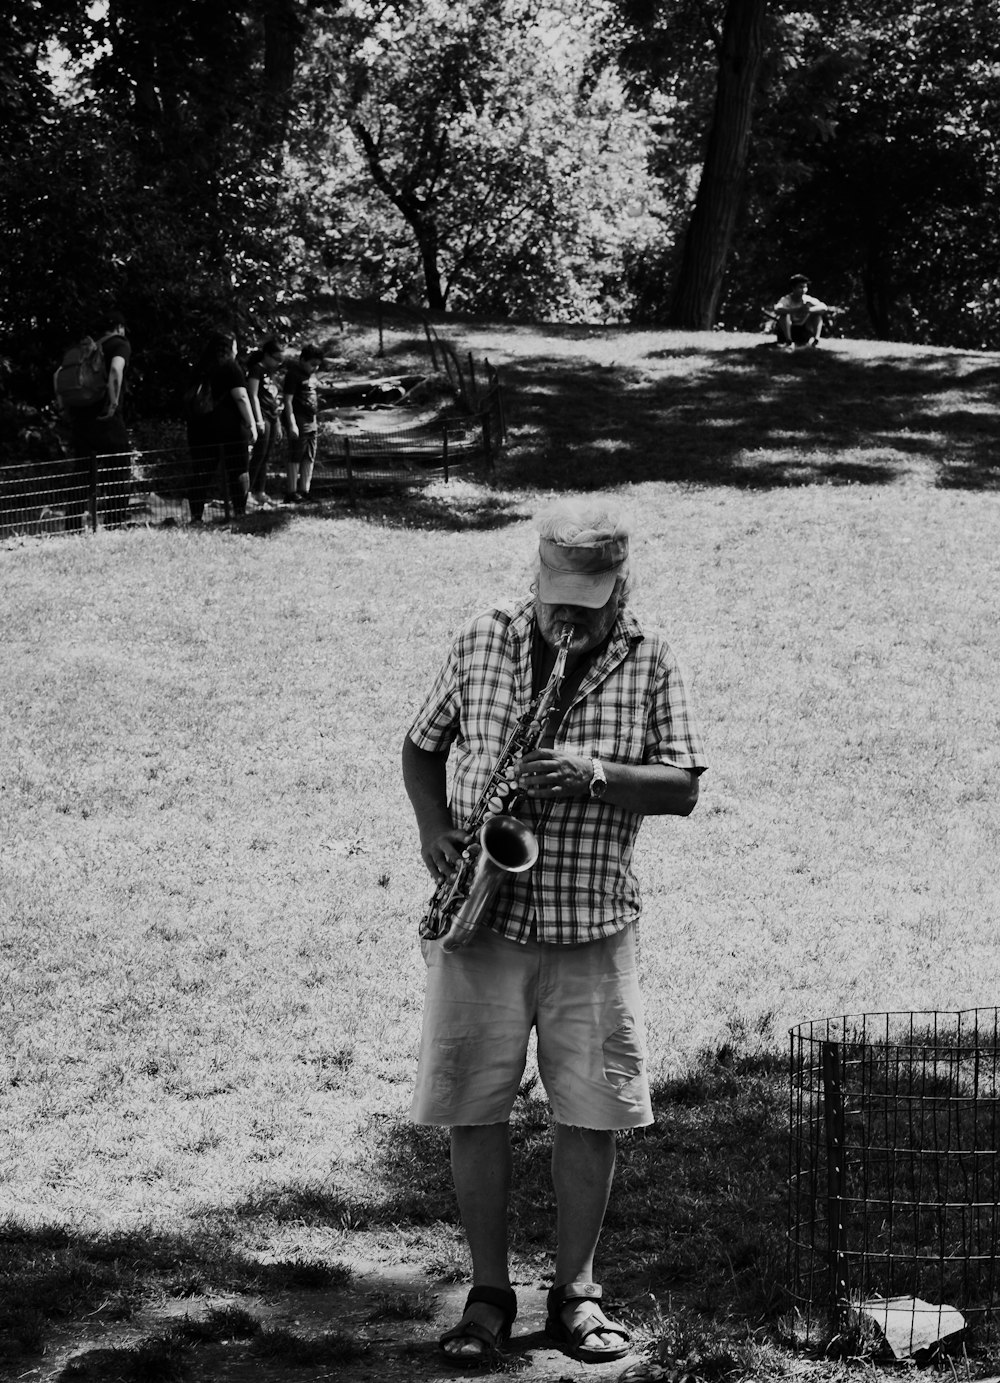 man playing saxophone on grass near trees